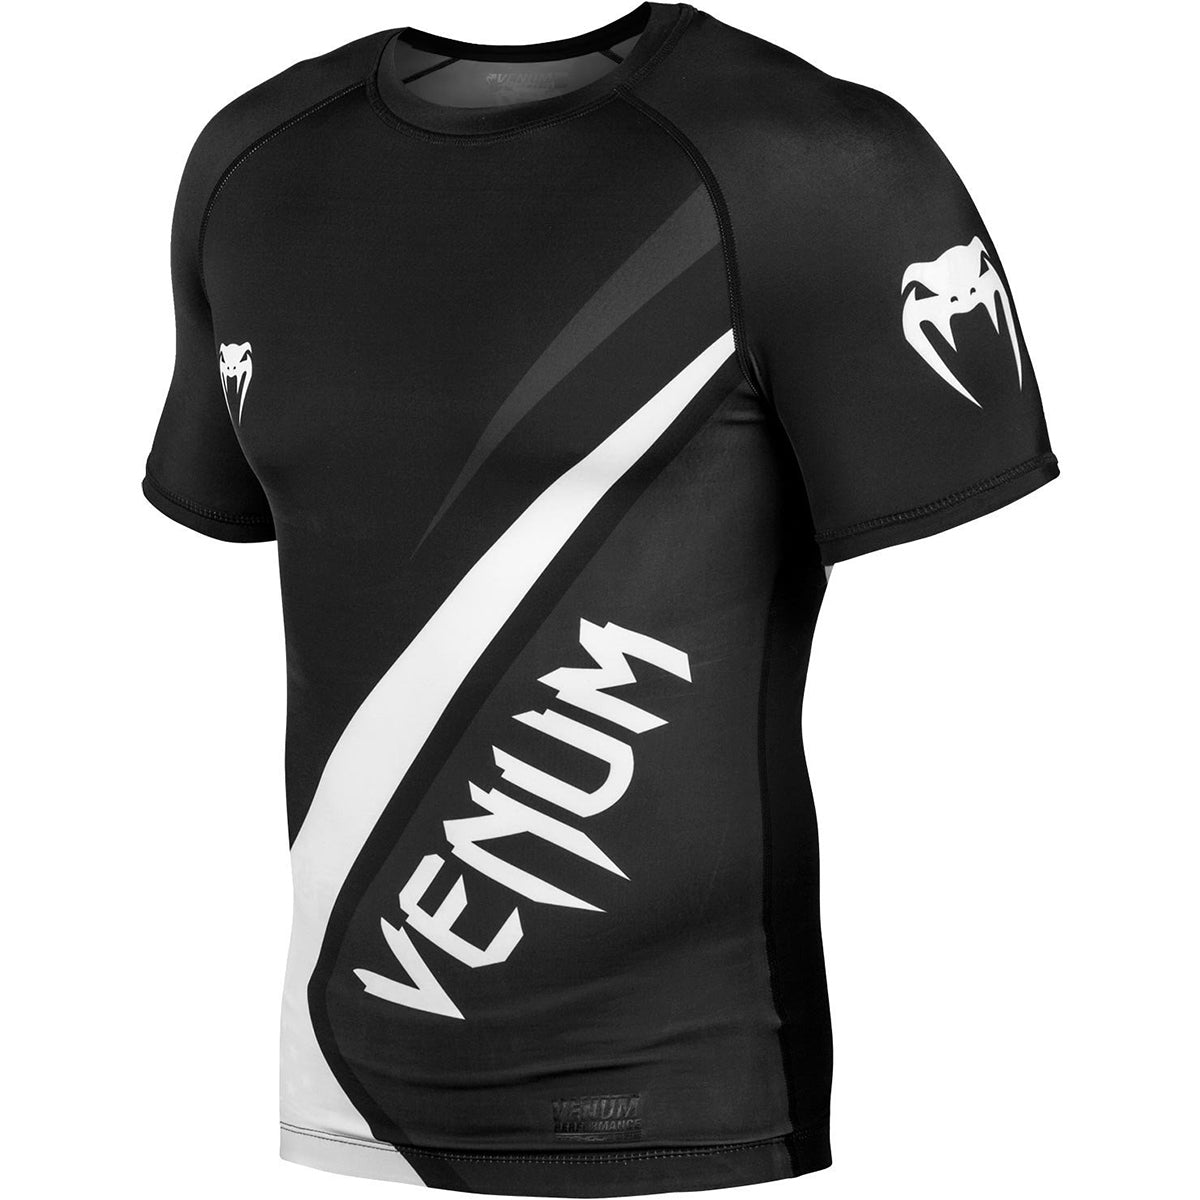 Venum Contender 4.0 Short Sleeve MMA Compression Rashguard - Black/Gray/White Venum